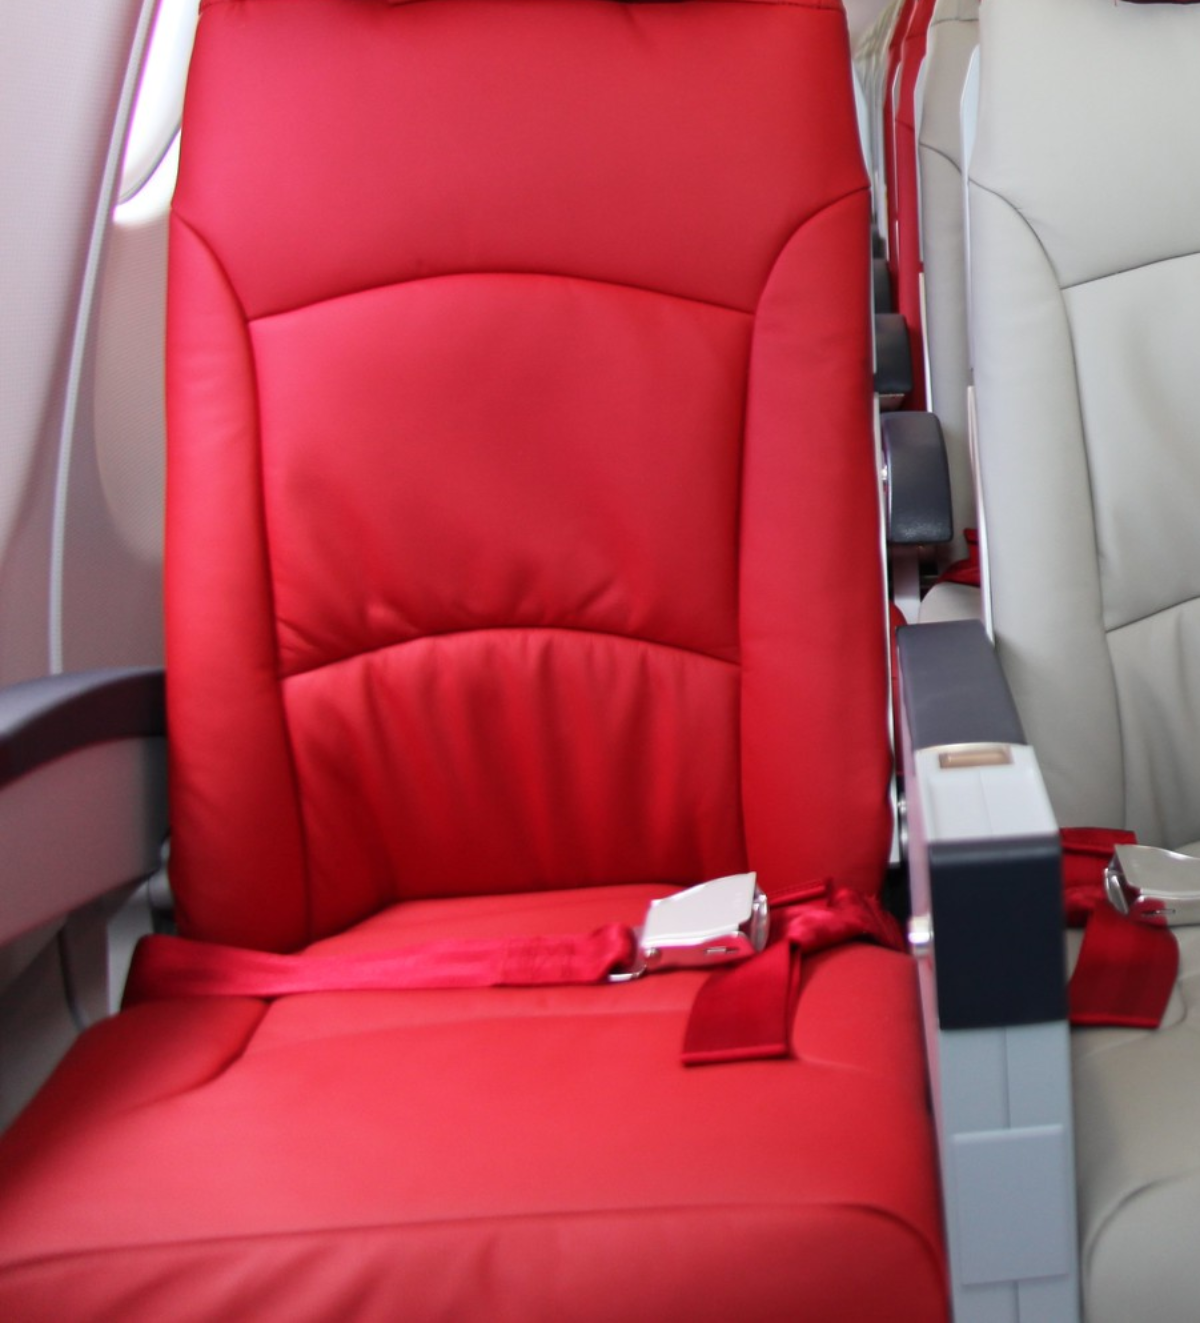 AirAsia A330-300 Economy Class Seat